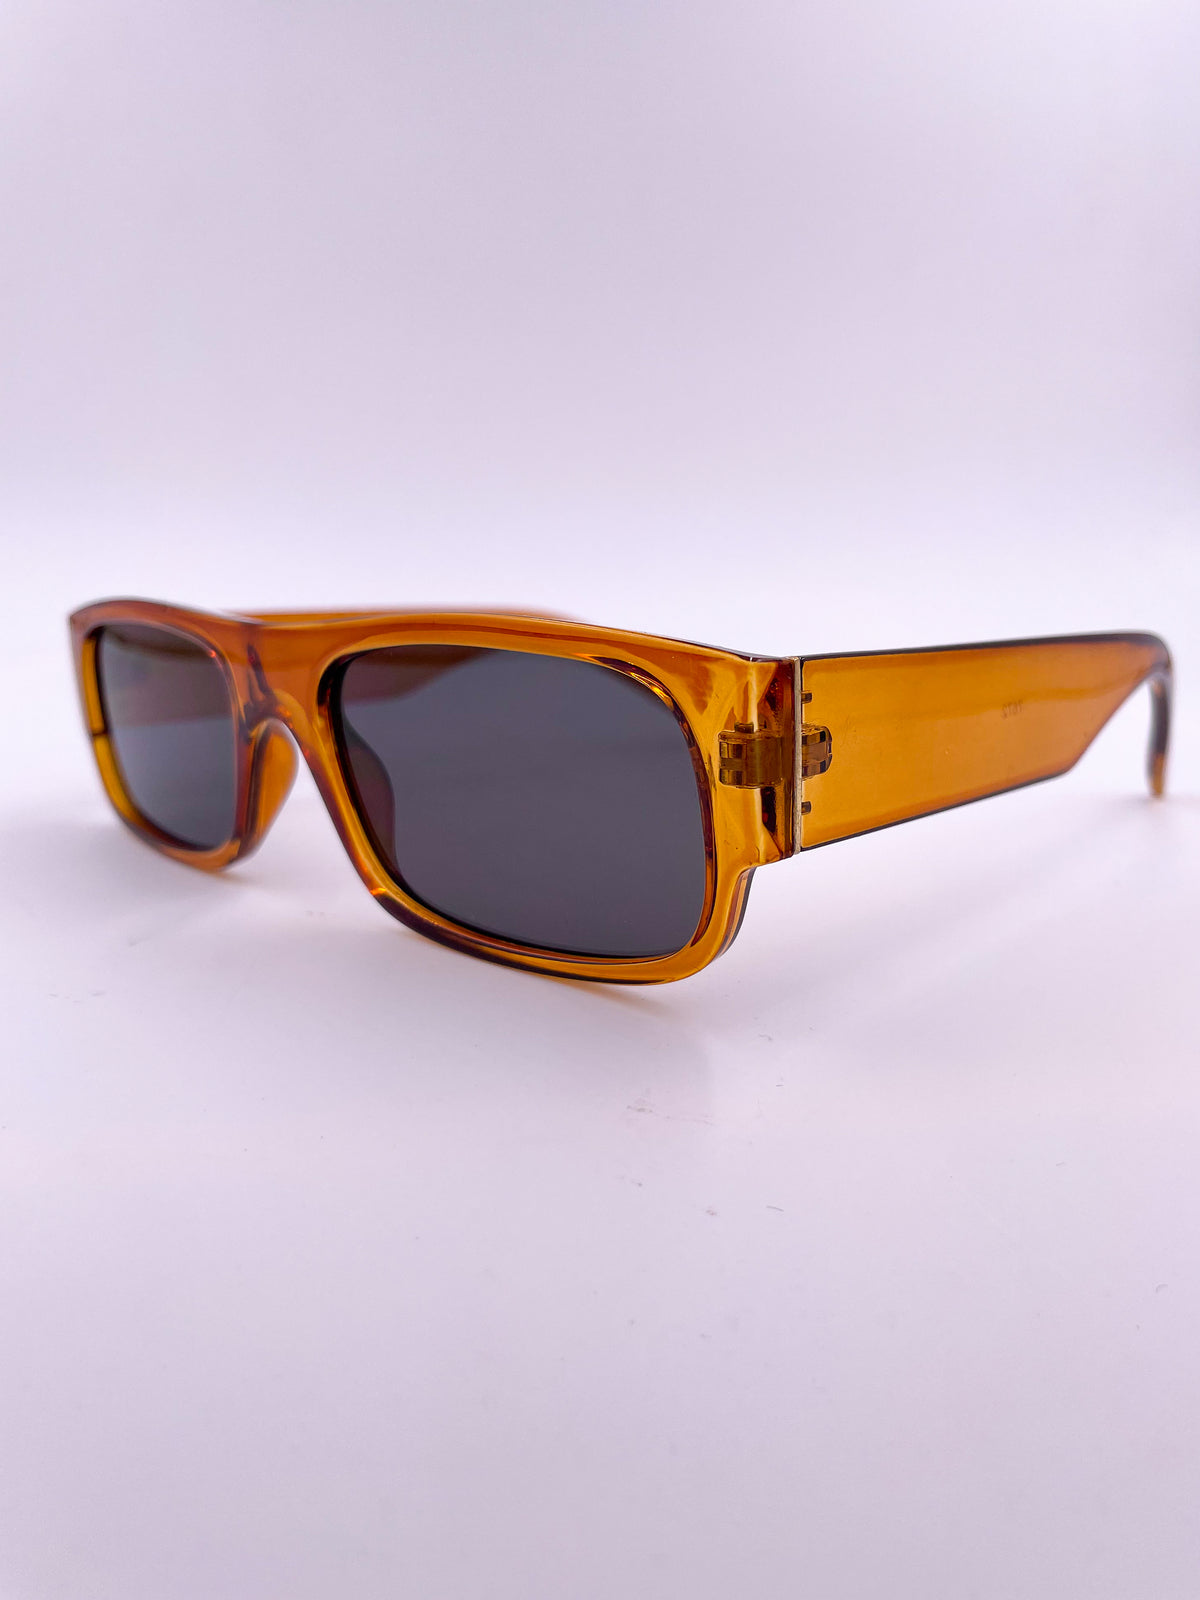 orange sunglasses, rectangular frame, dark lens, thick arms/nose bridge